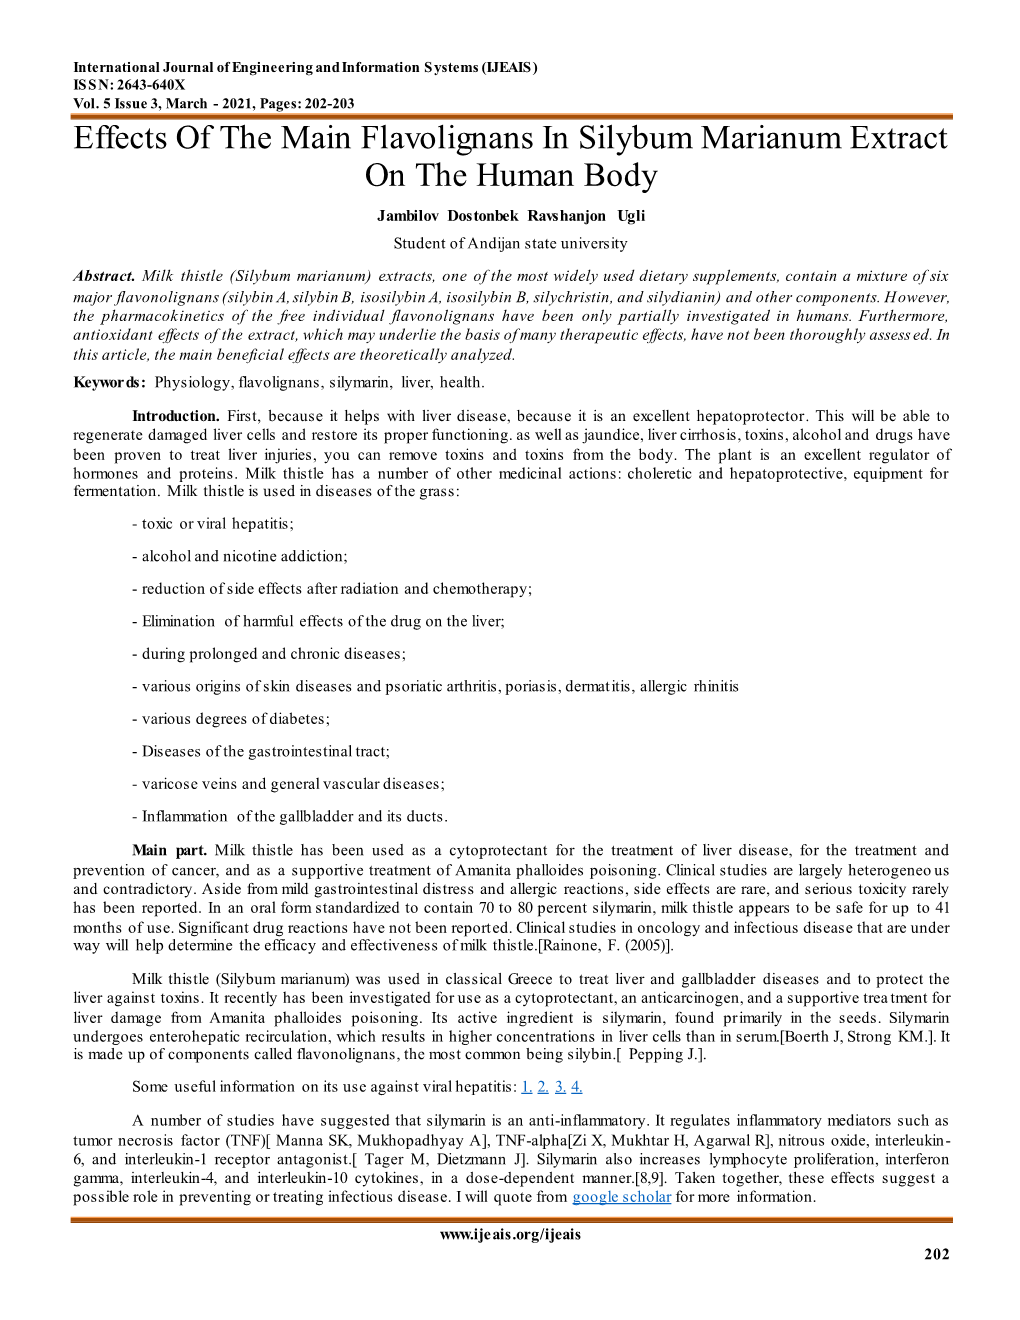 Effects of the Main Flavolignans in Silybum Marianum Extract on the Human Body Jambilov Dostonbek Ravshanjon Ugli Student of Andijan State University Abstract